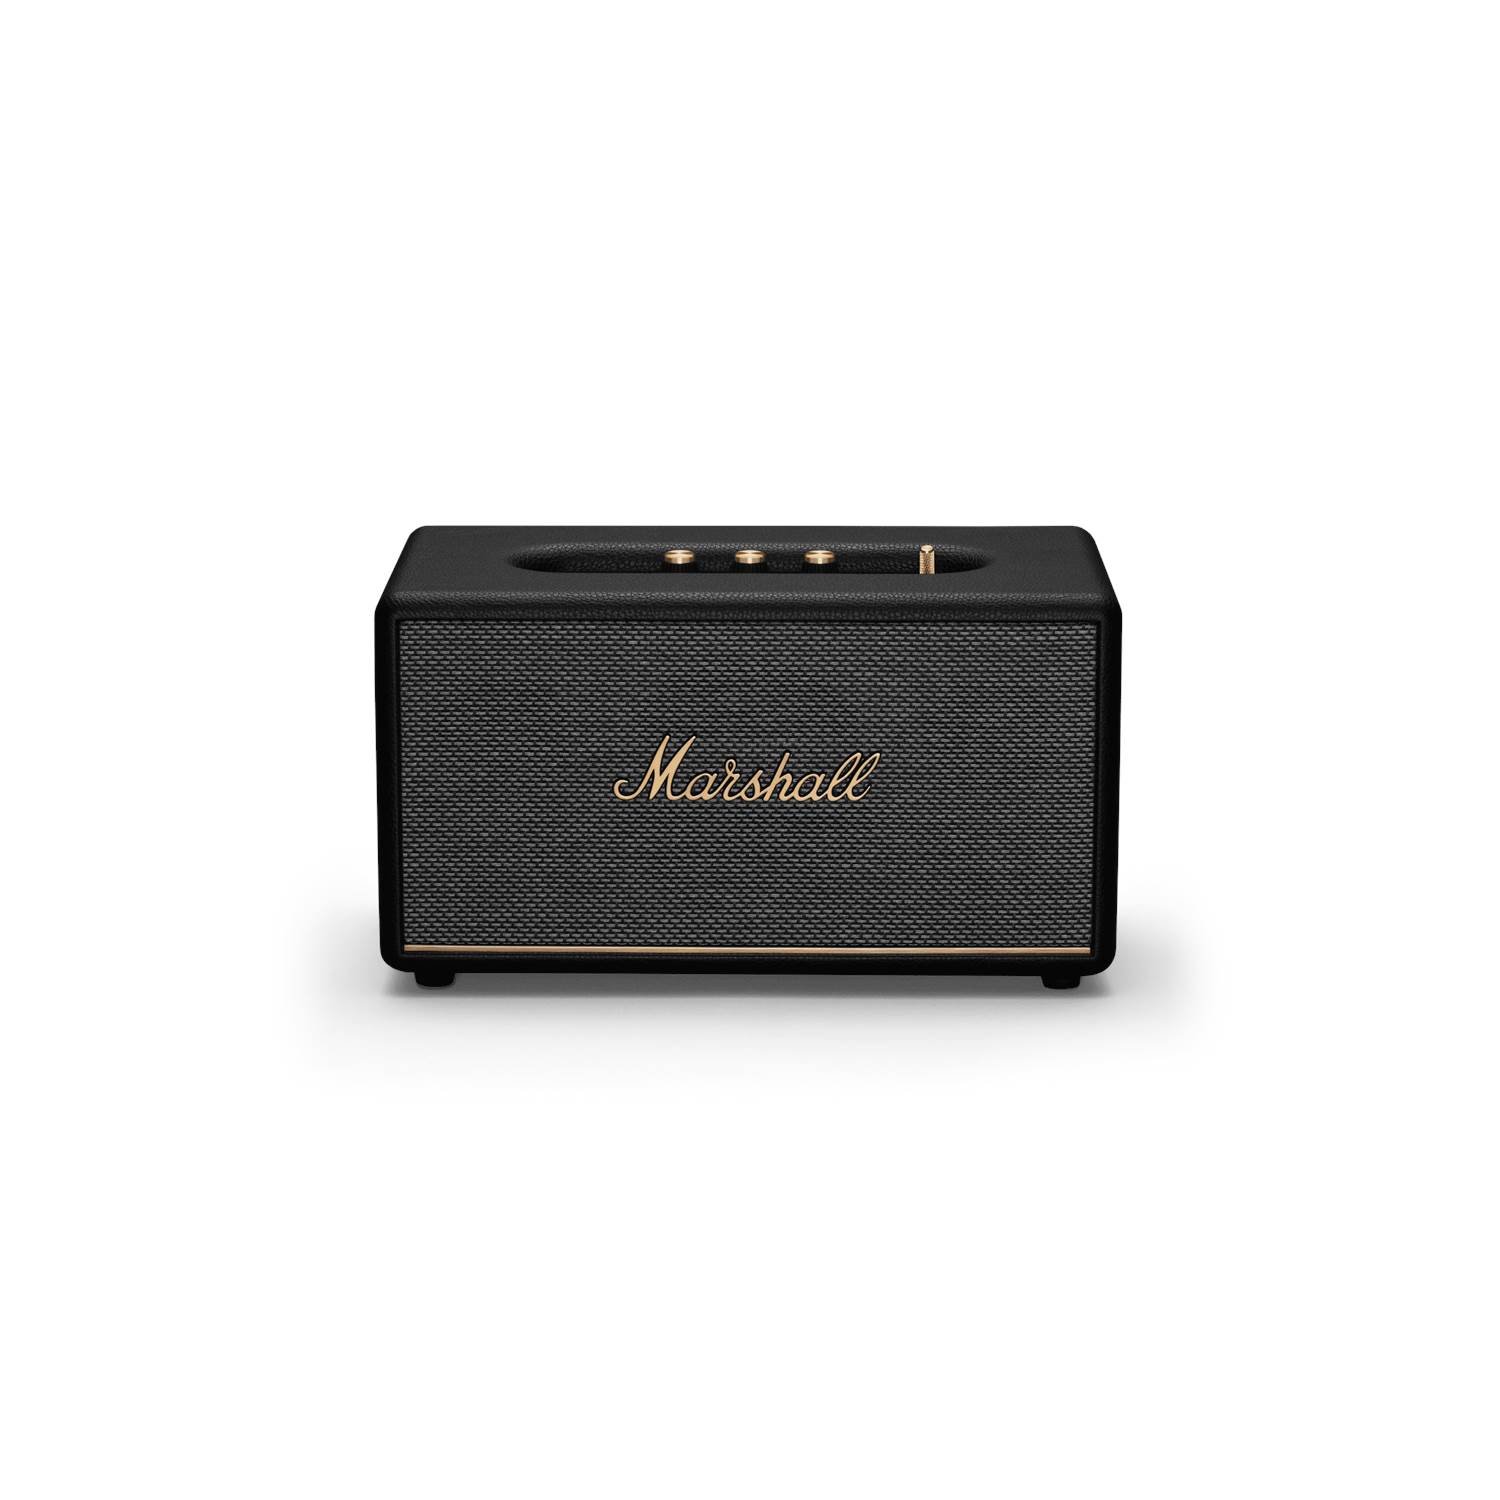 Marshall Stanmore III Bluetooth Black